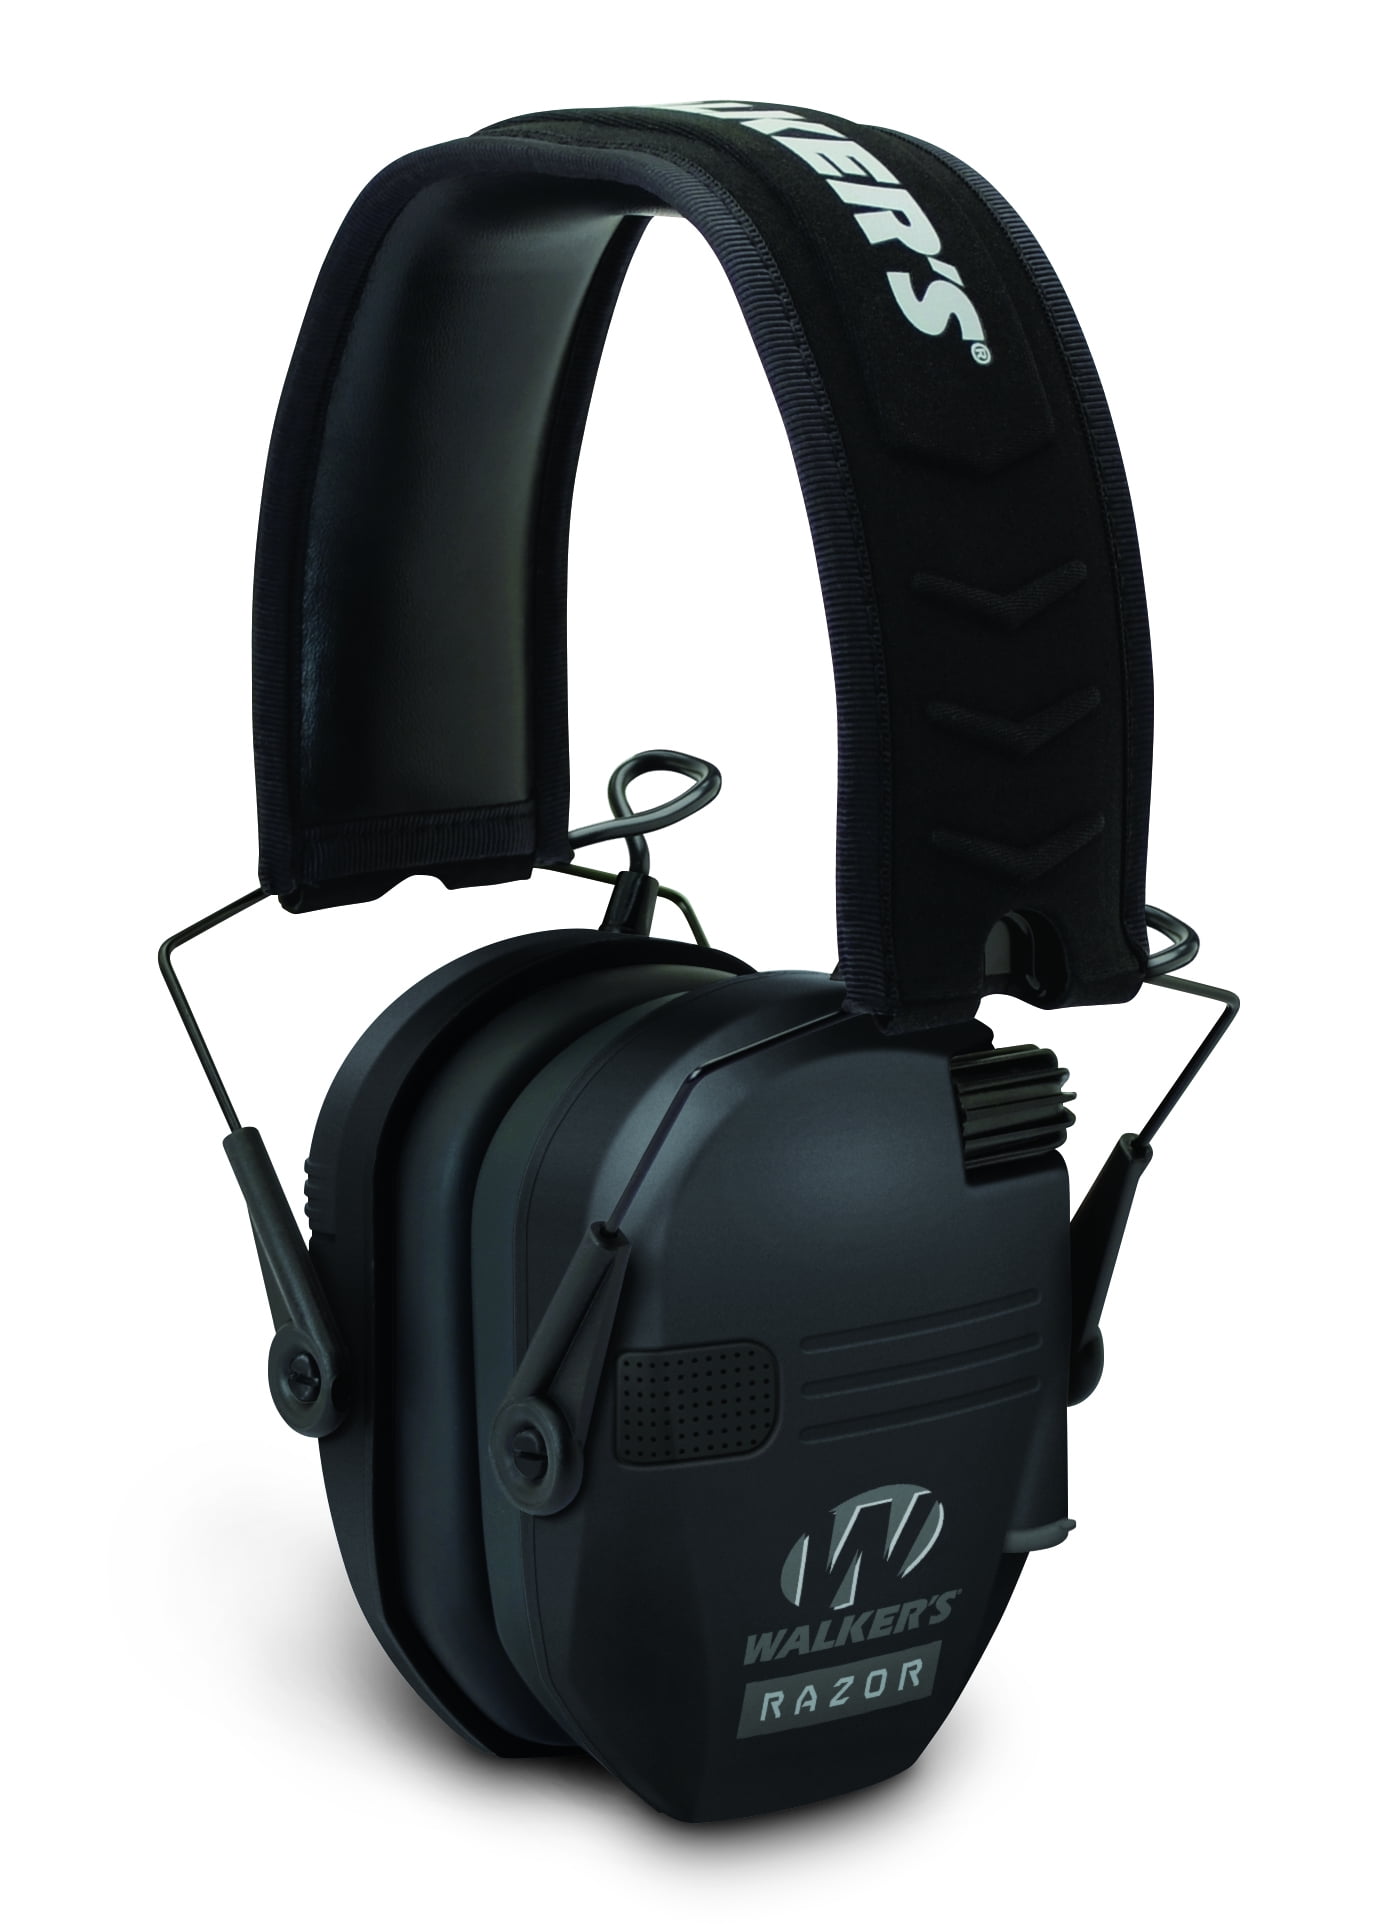 Walker's Game Ear Muff RAZOR Slim Electronic Hearing Protector 23 dB NRR KRYPTEK 